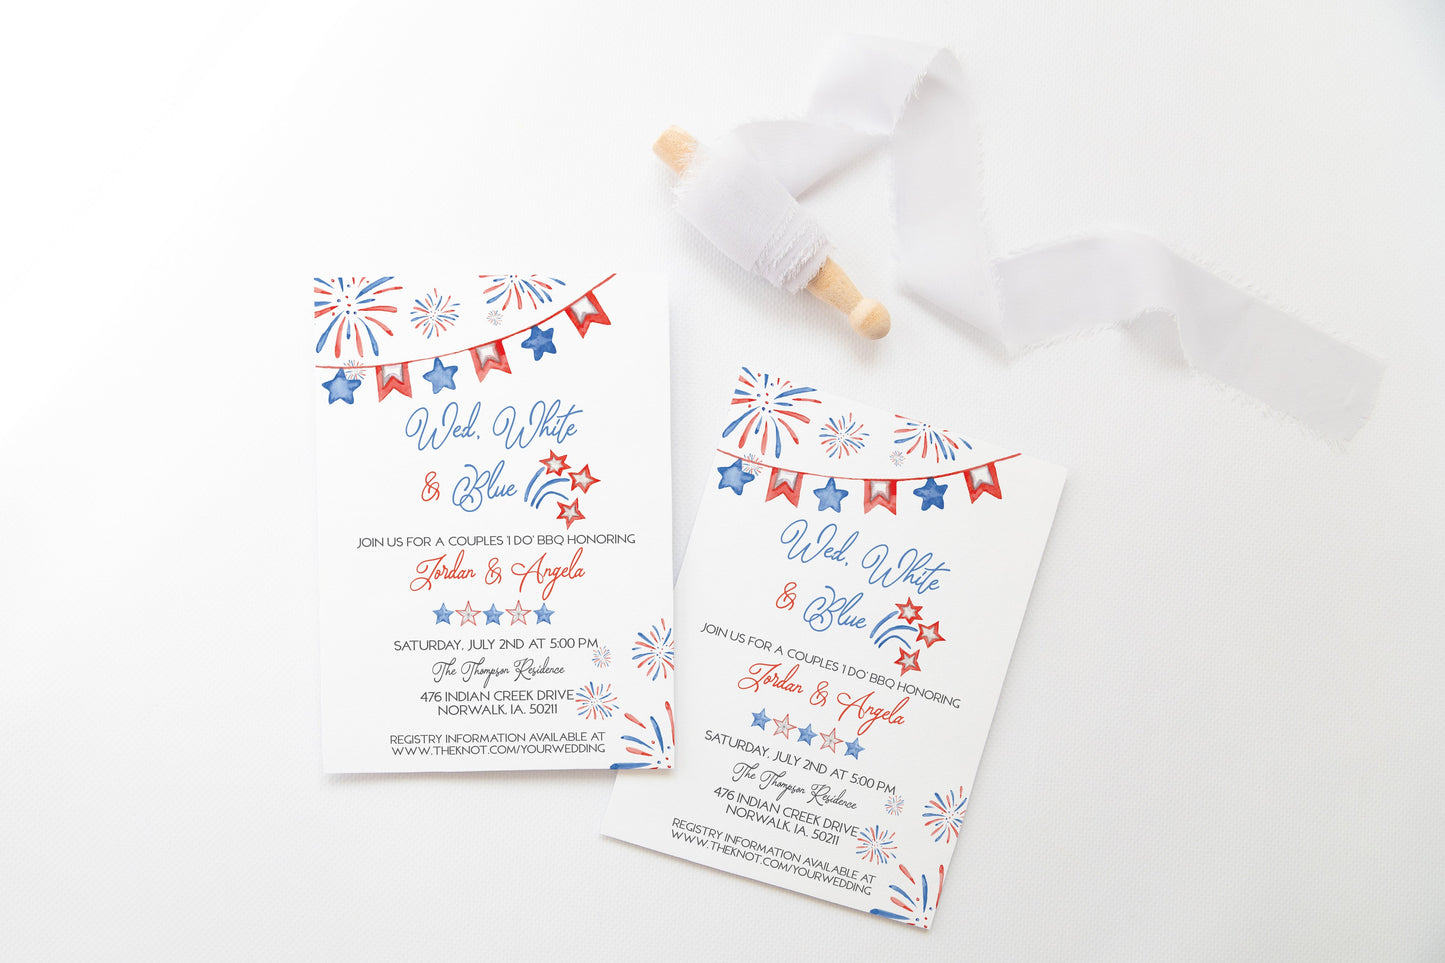 Wed, White & Blue Couples Shower Invitation - Digital Download